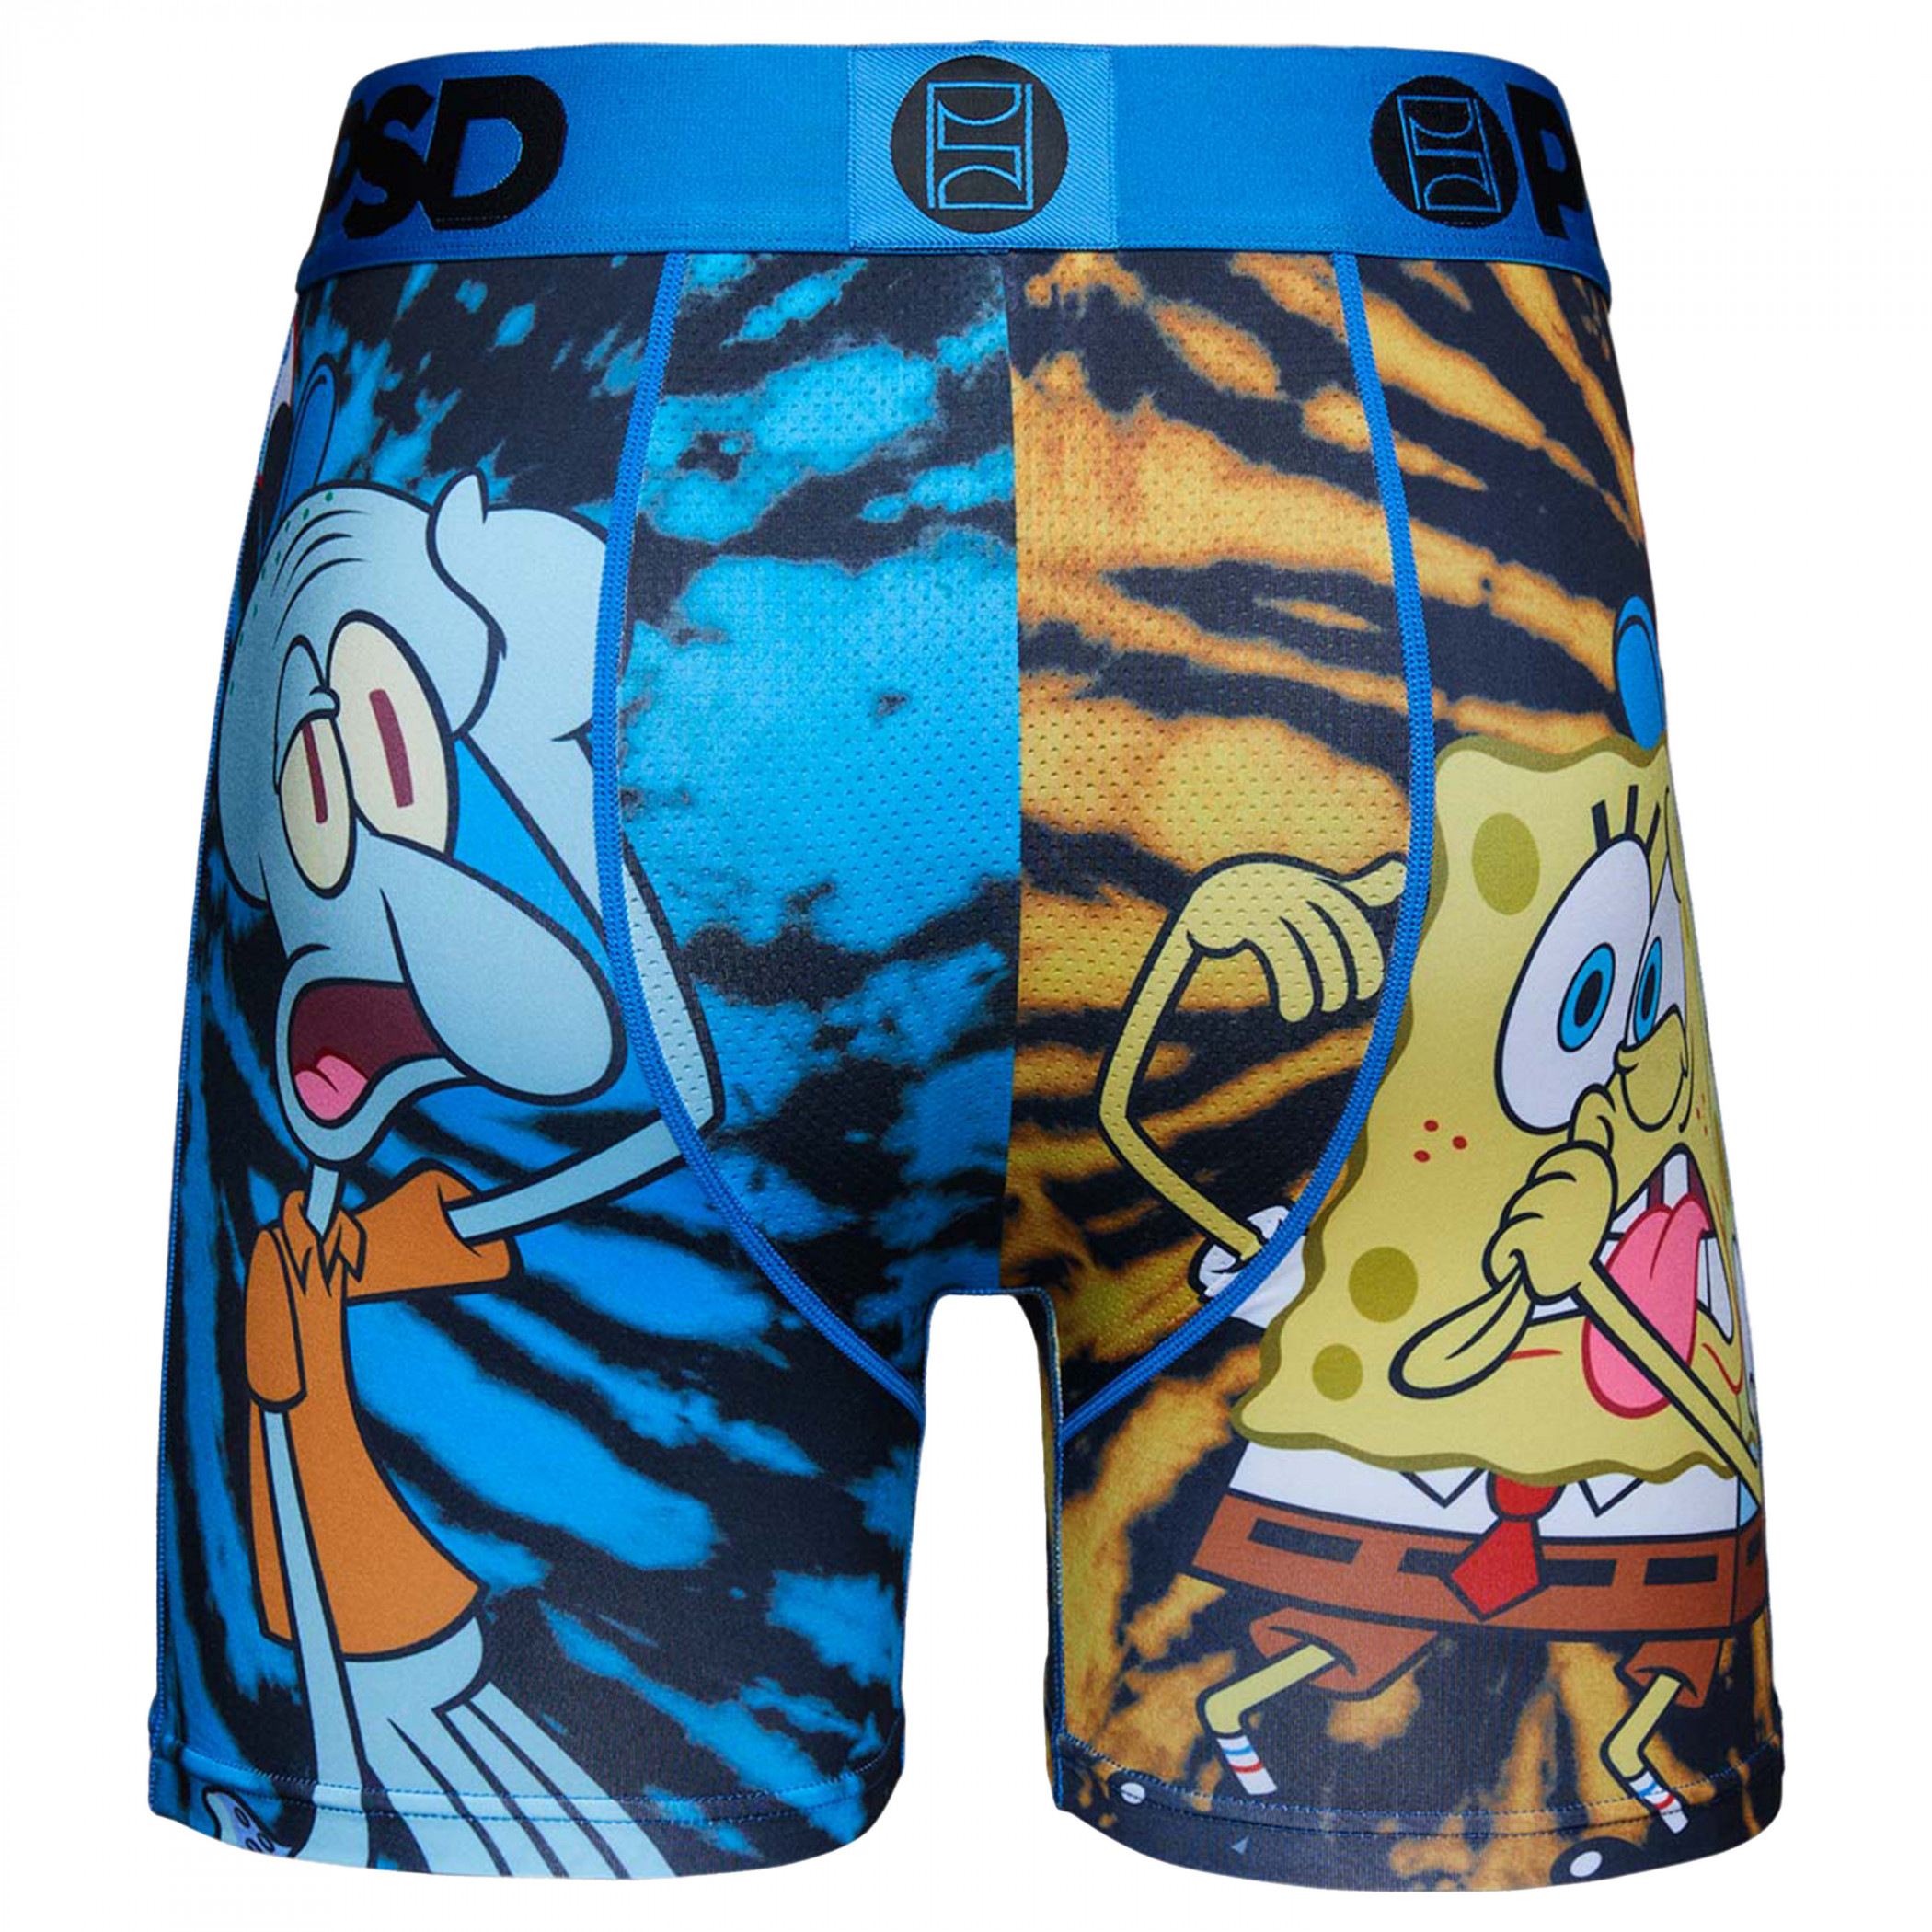 SpongeBob SquarePants Frienemies Tie Dye PSD Boxer Briefs